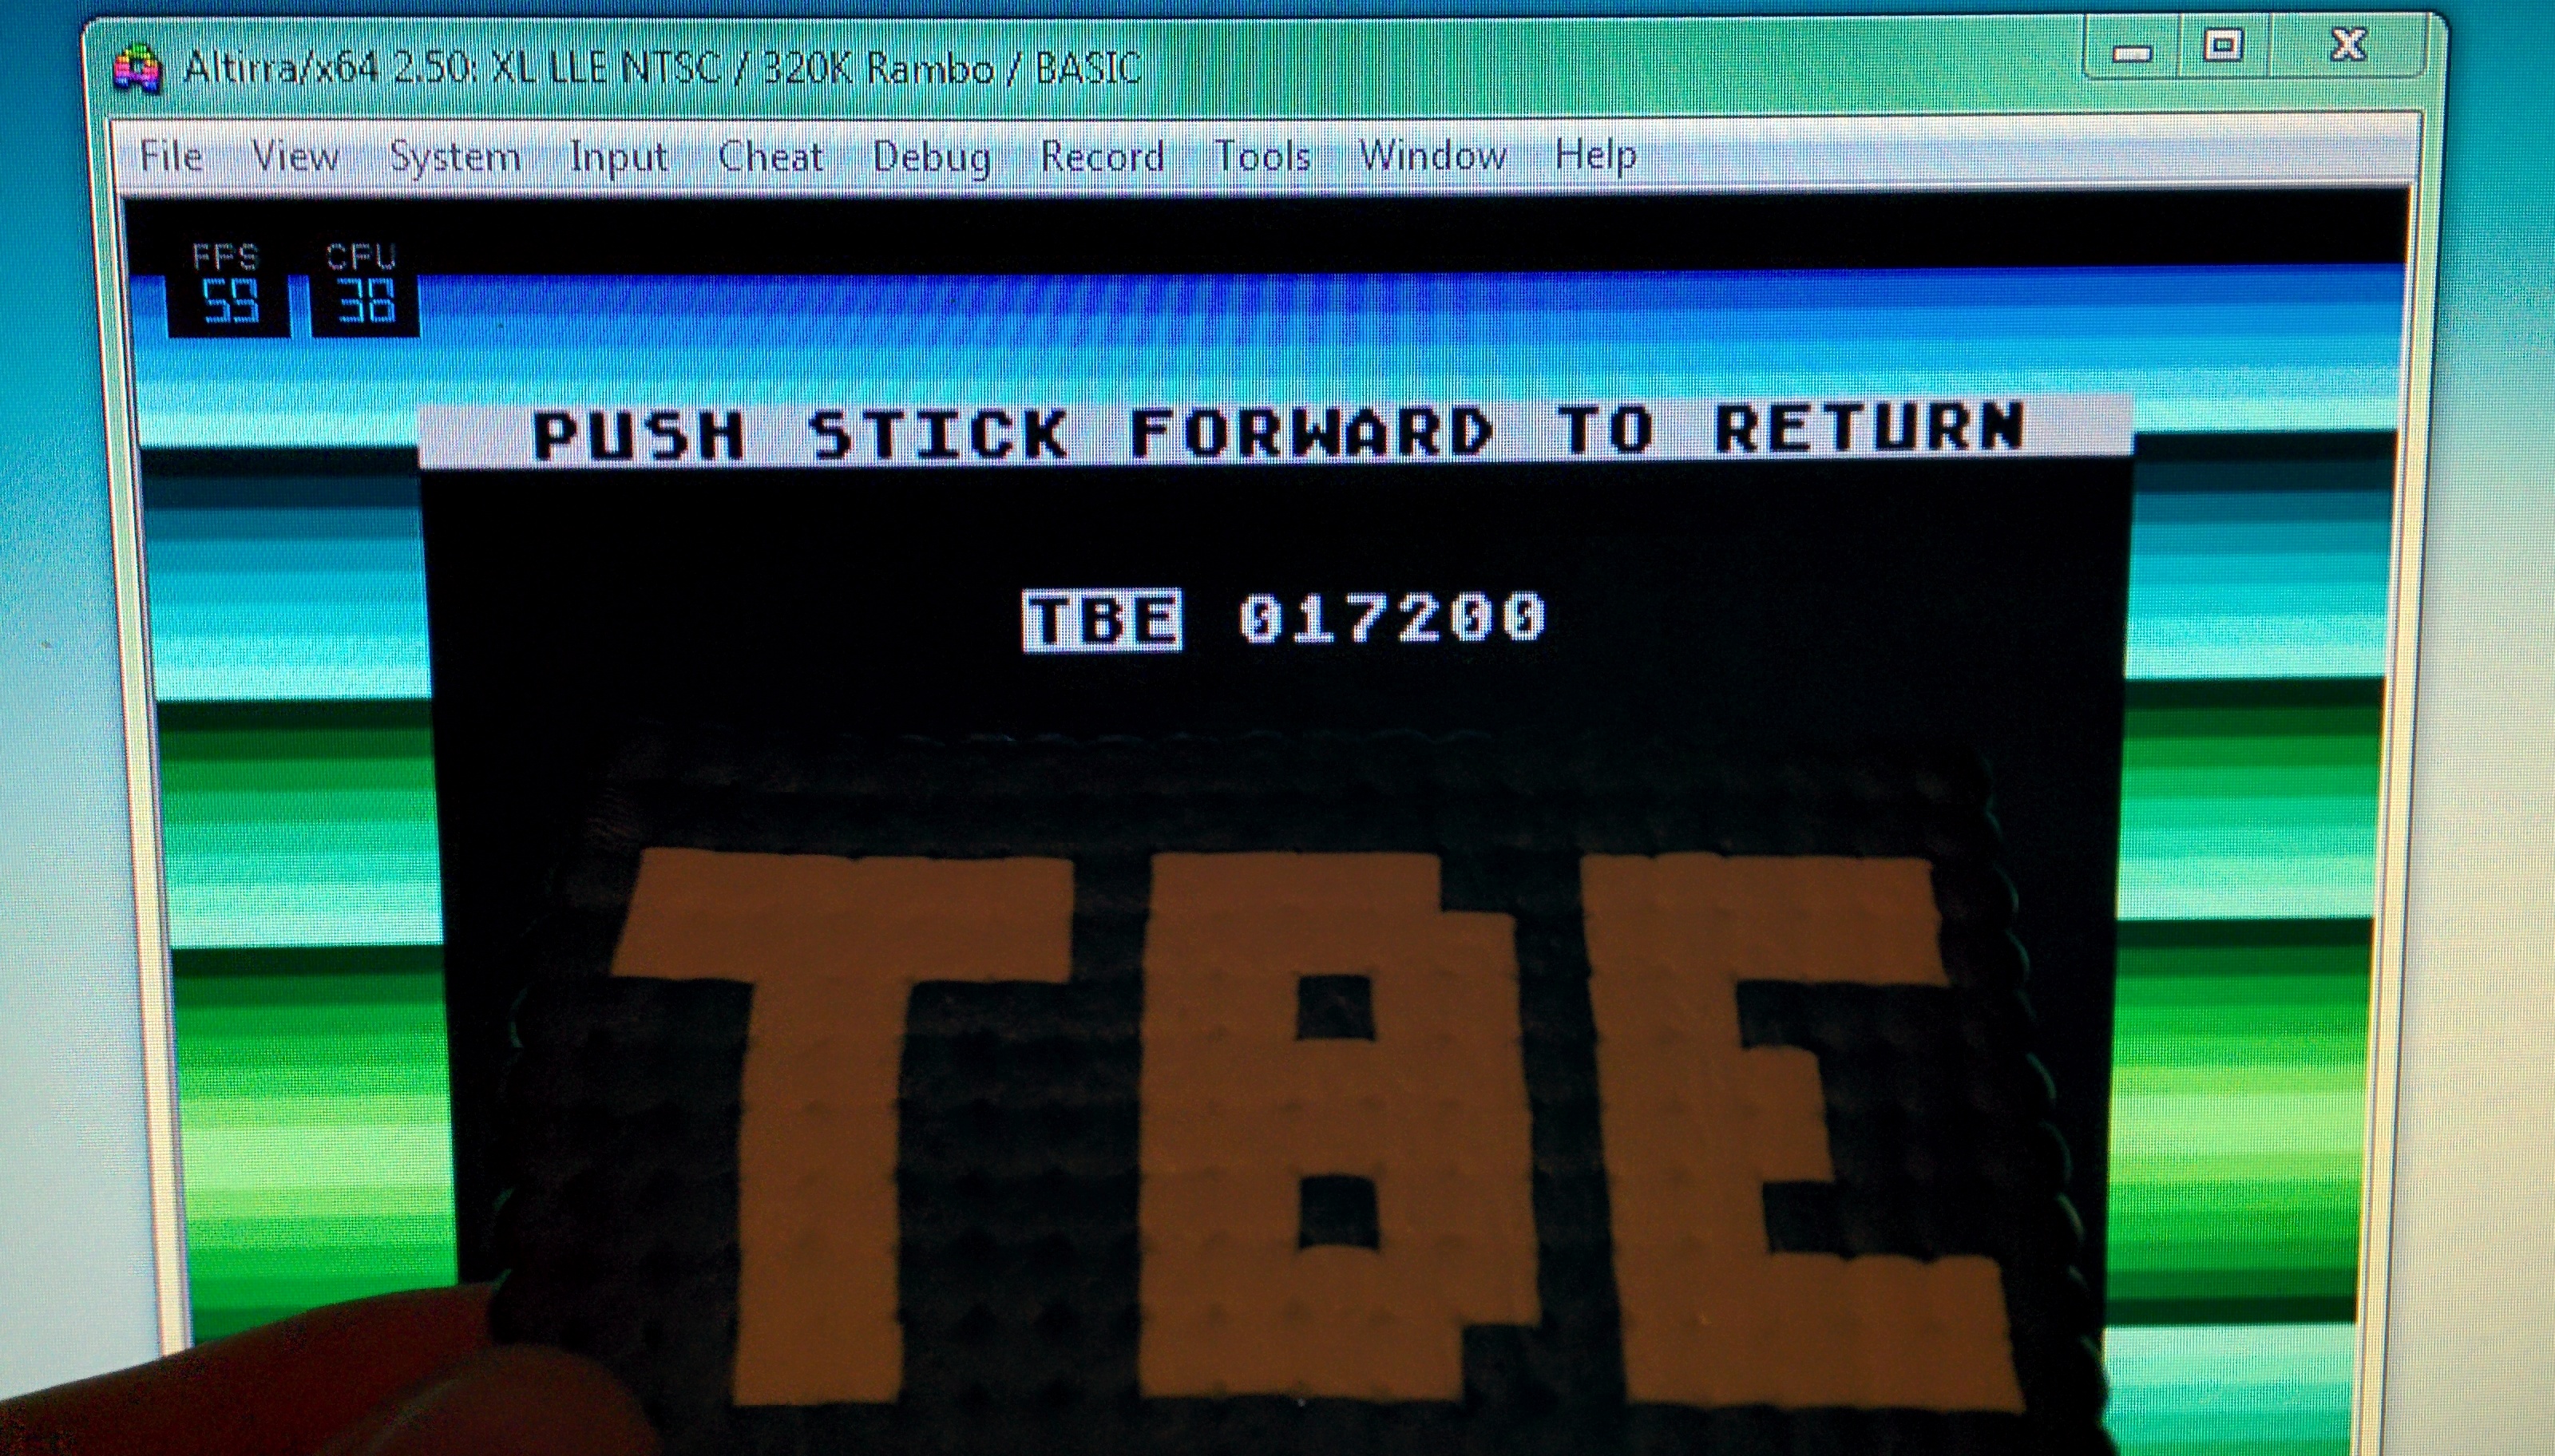 Sixx: Cosmic Tunnels (Atari 400/800/XL/XE Emulated) 17,200 points on 2014-10-16 13:59:33